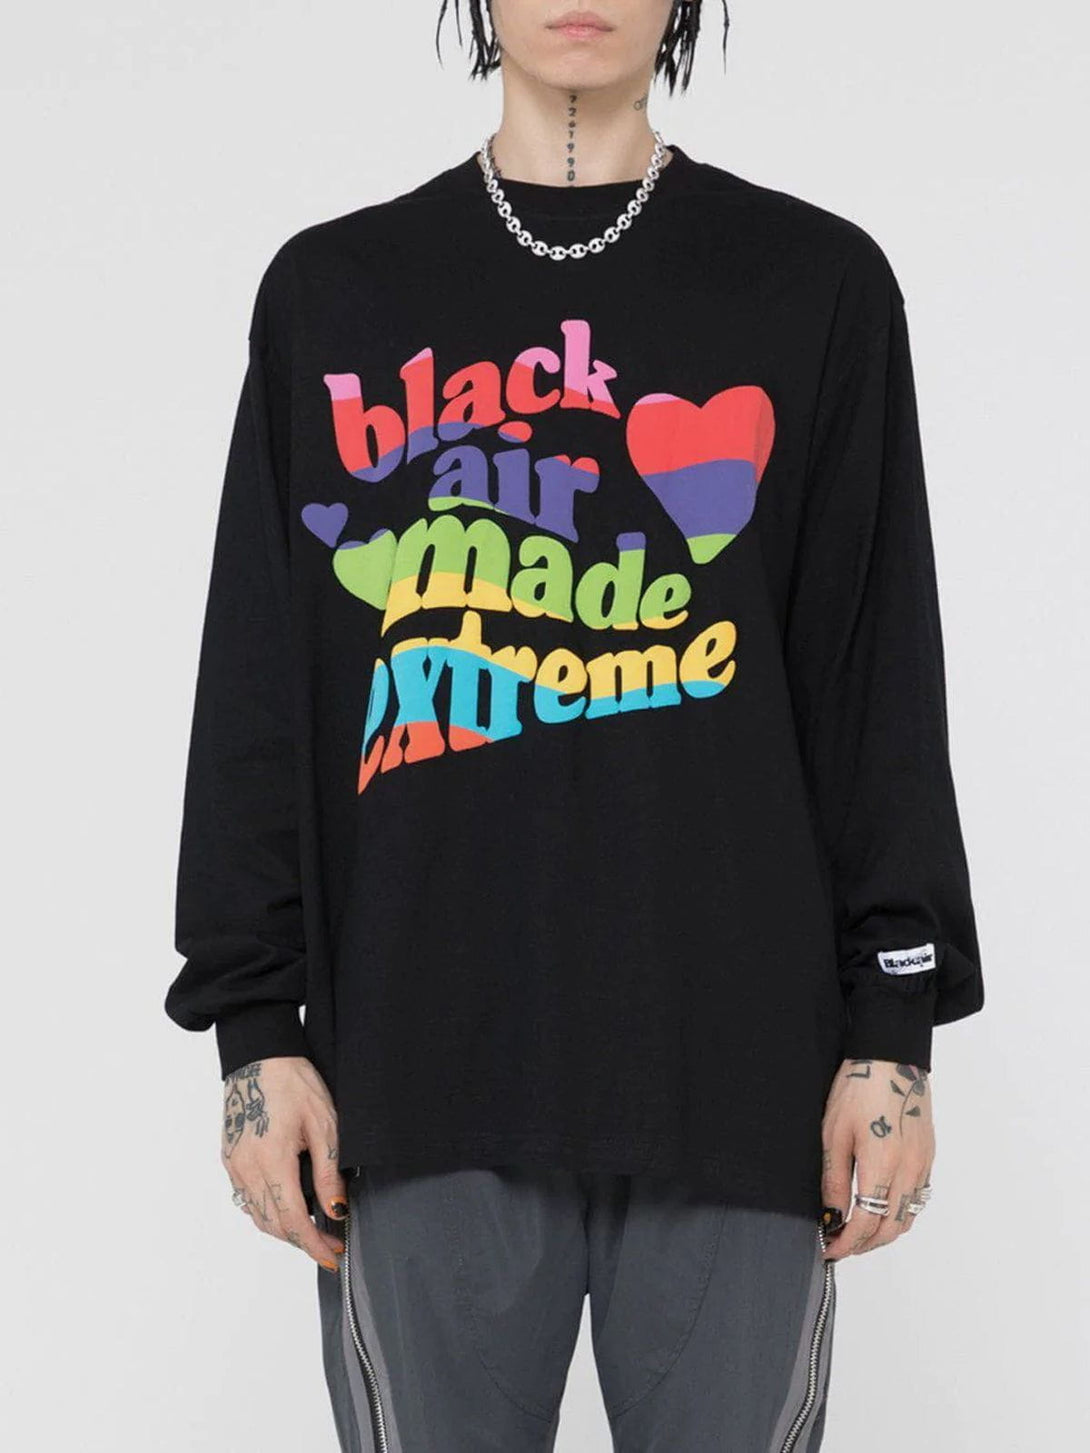 Majesda® - Letter Heart Graphic Sweatshirt outfit ideas streetwear fashion